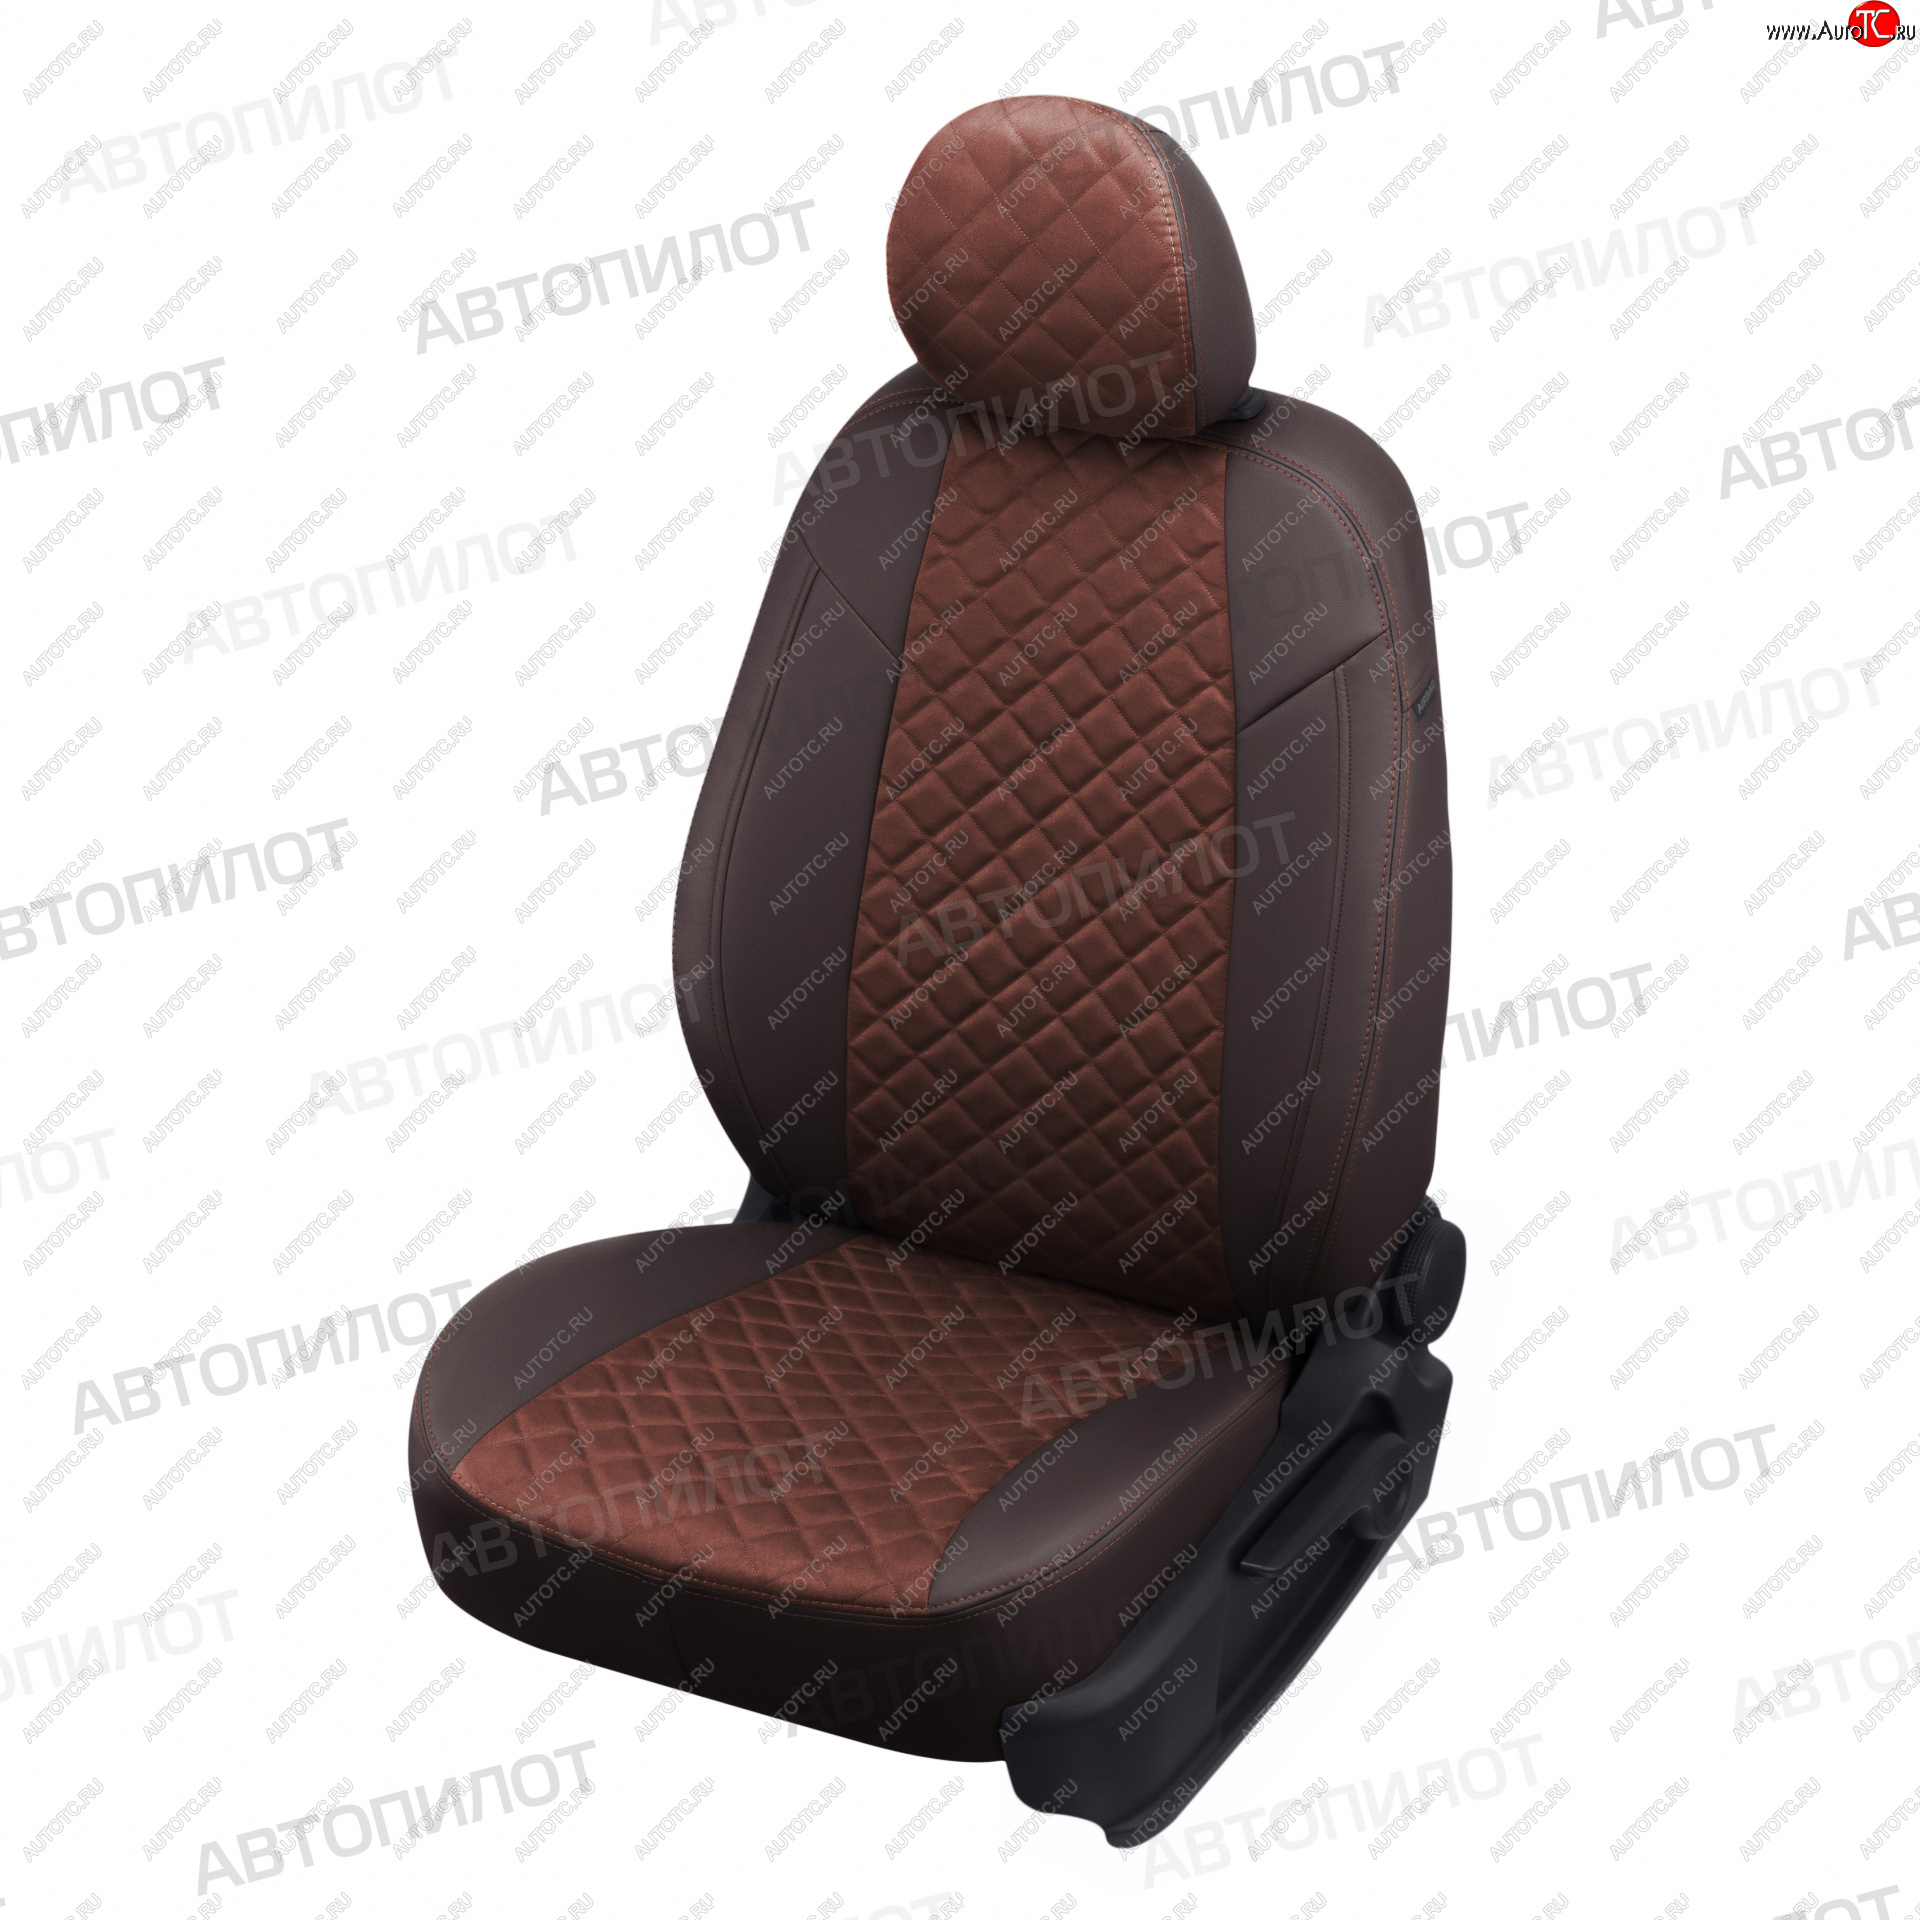 13 999 р. Чехлы сидений (экокожа/алькантара) Автопилот Ромб  Chevrolet Aveo ( T200,  T250) (2002-2011) (шоколад)